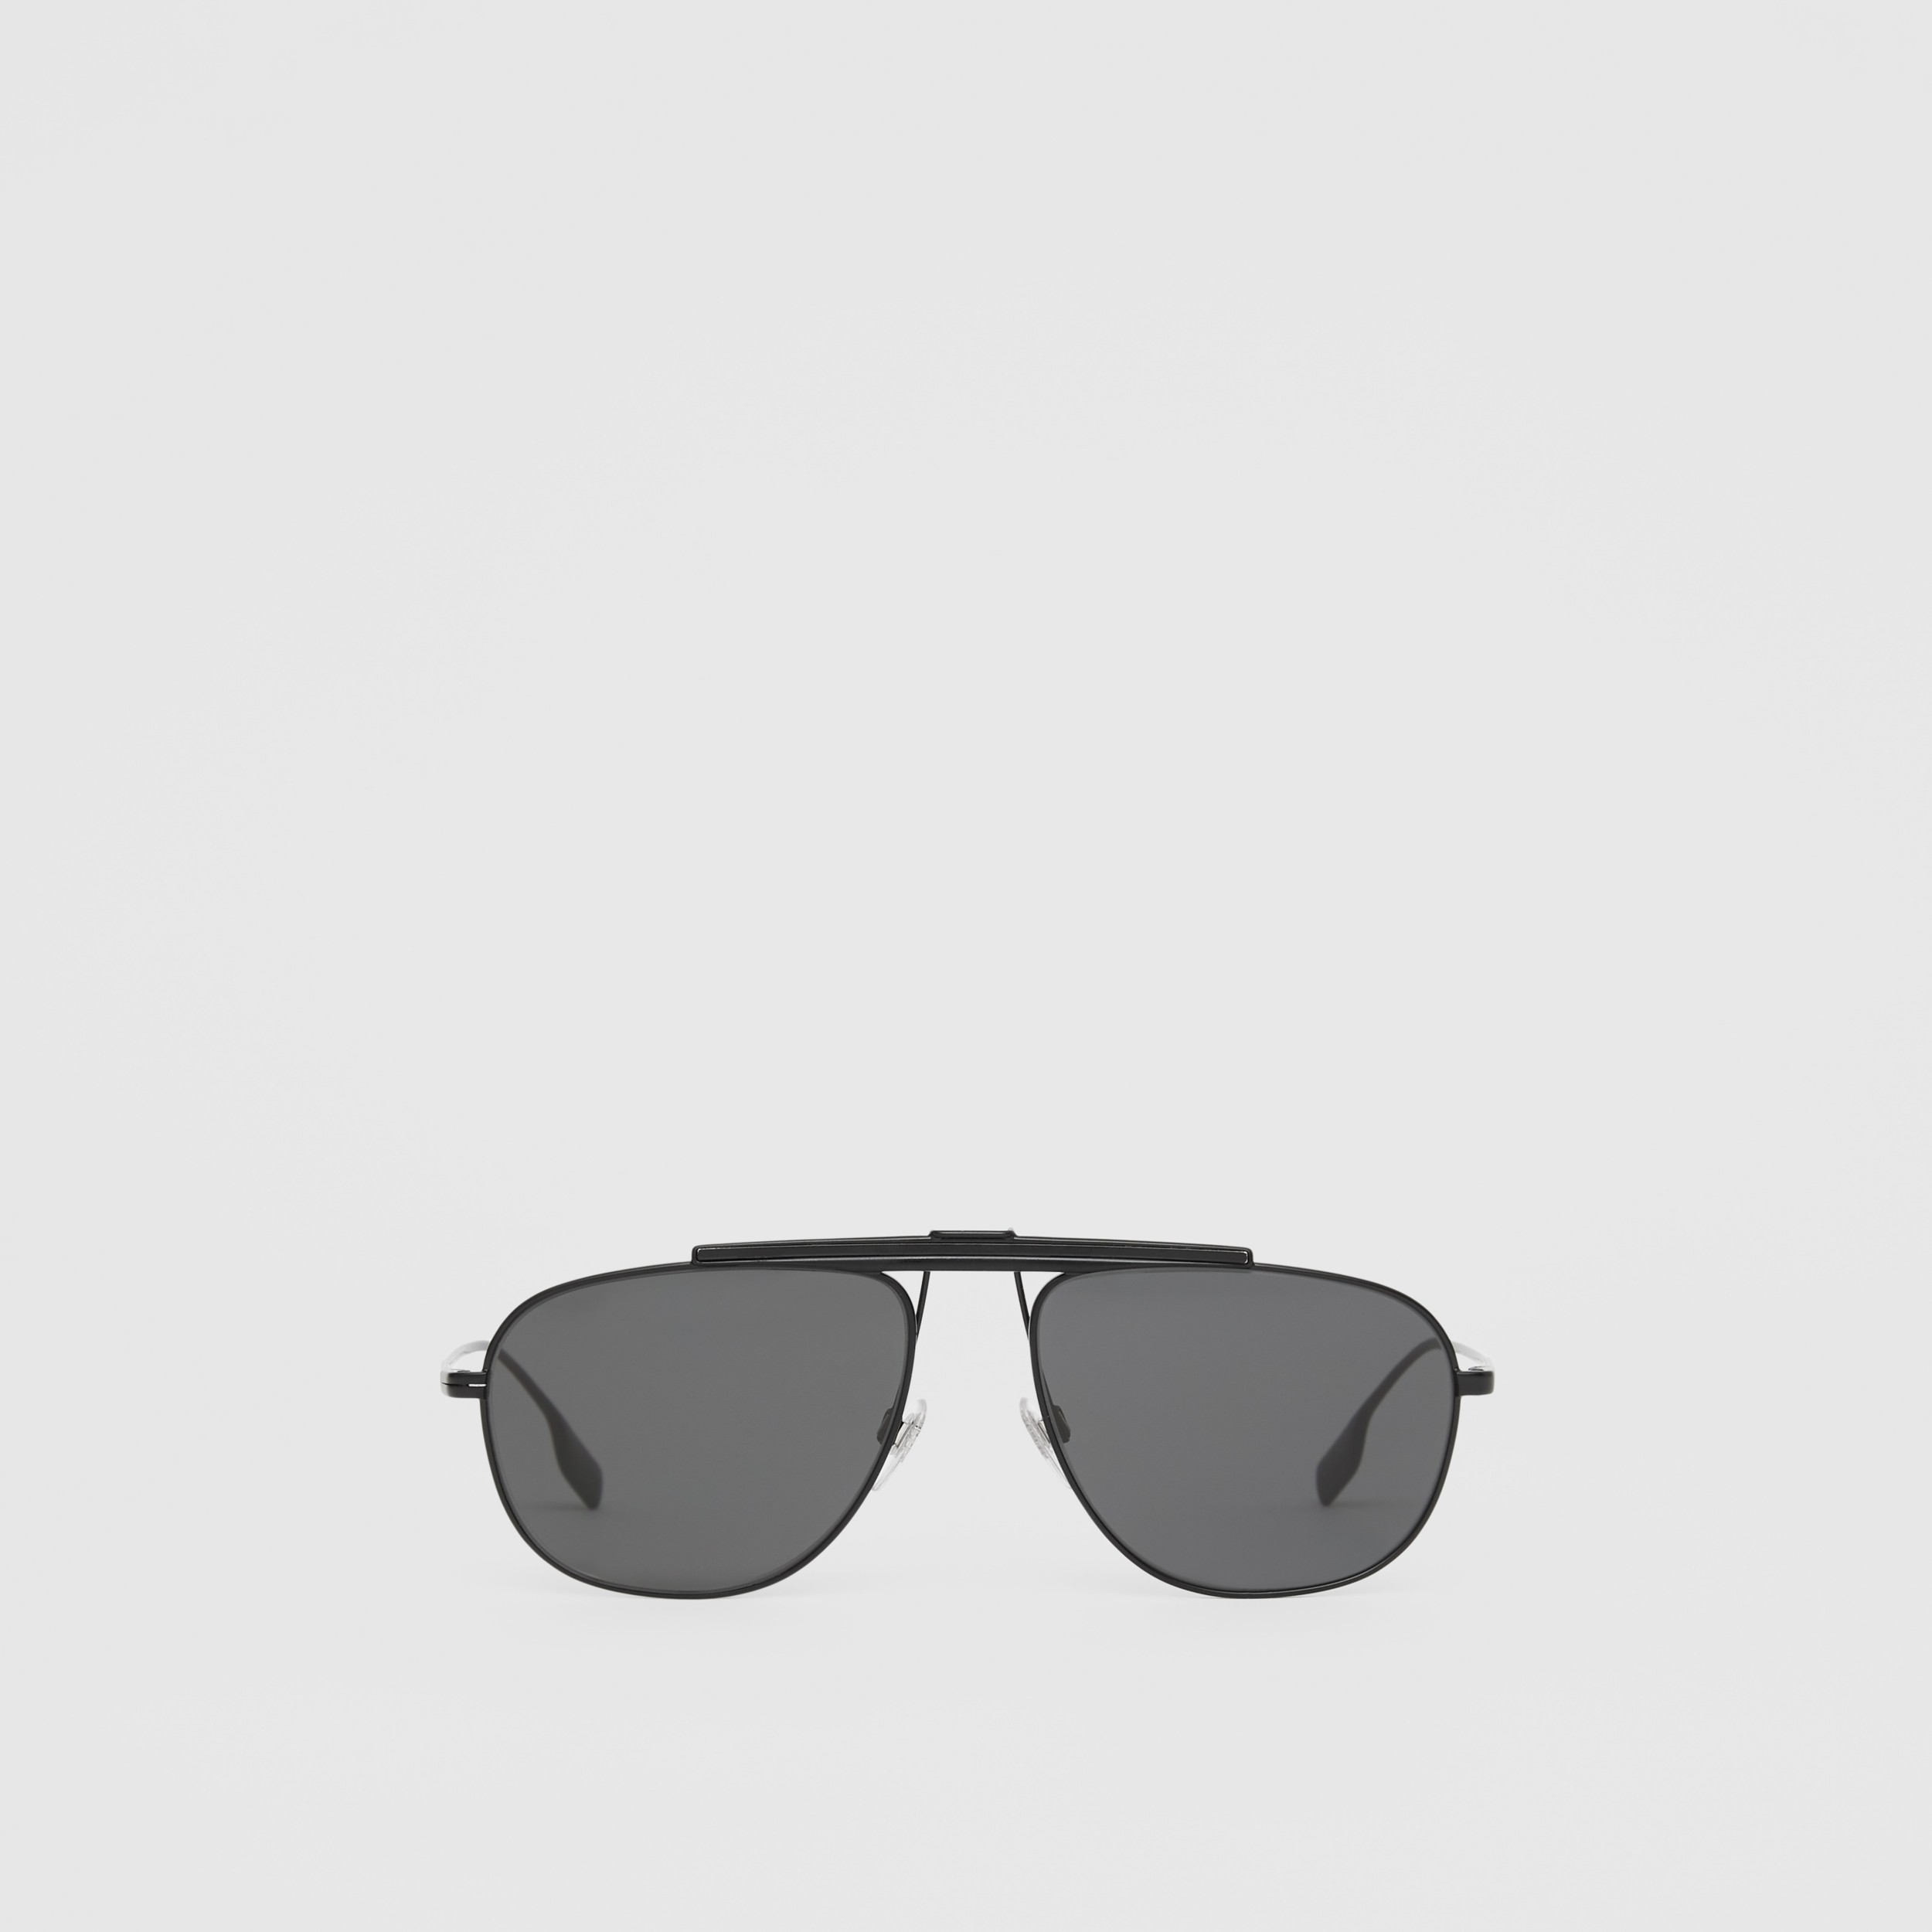 Pilot Sunglasses in Matte Black - Men | Burberry United States